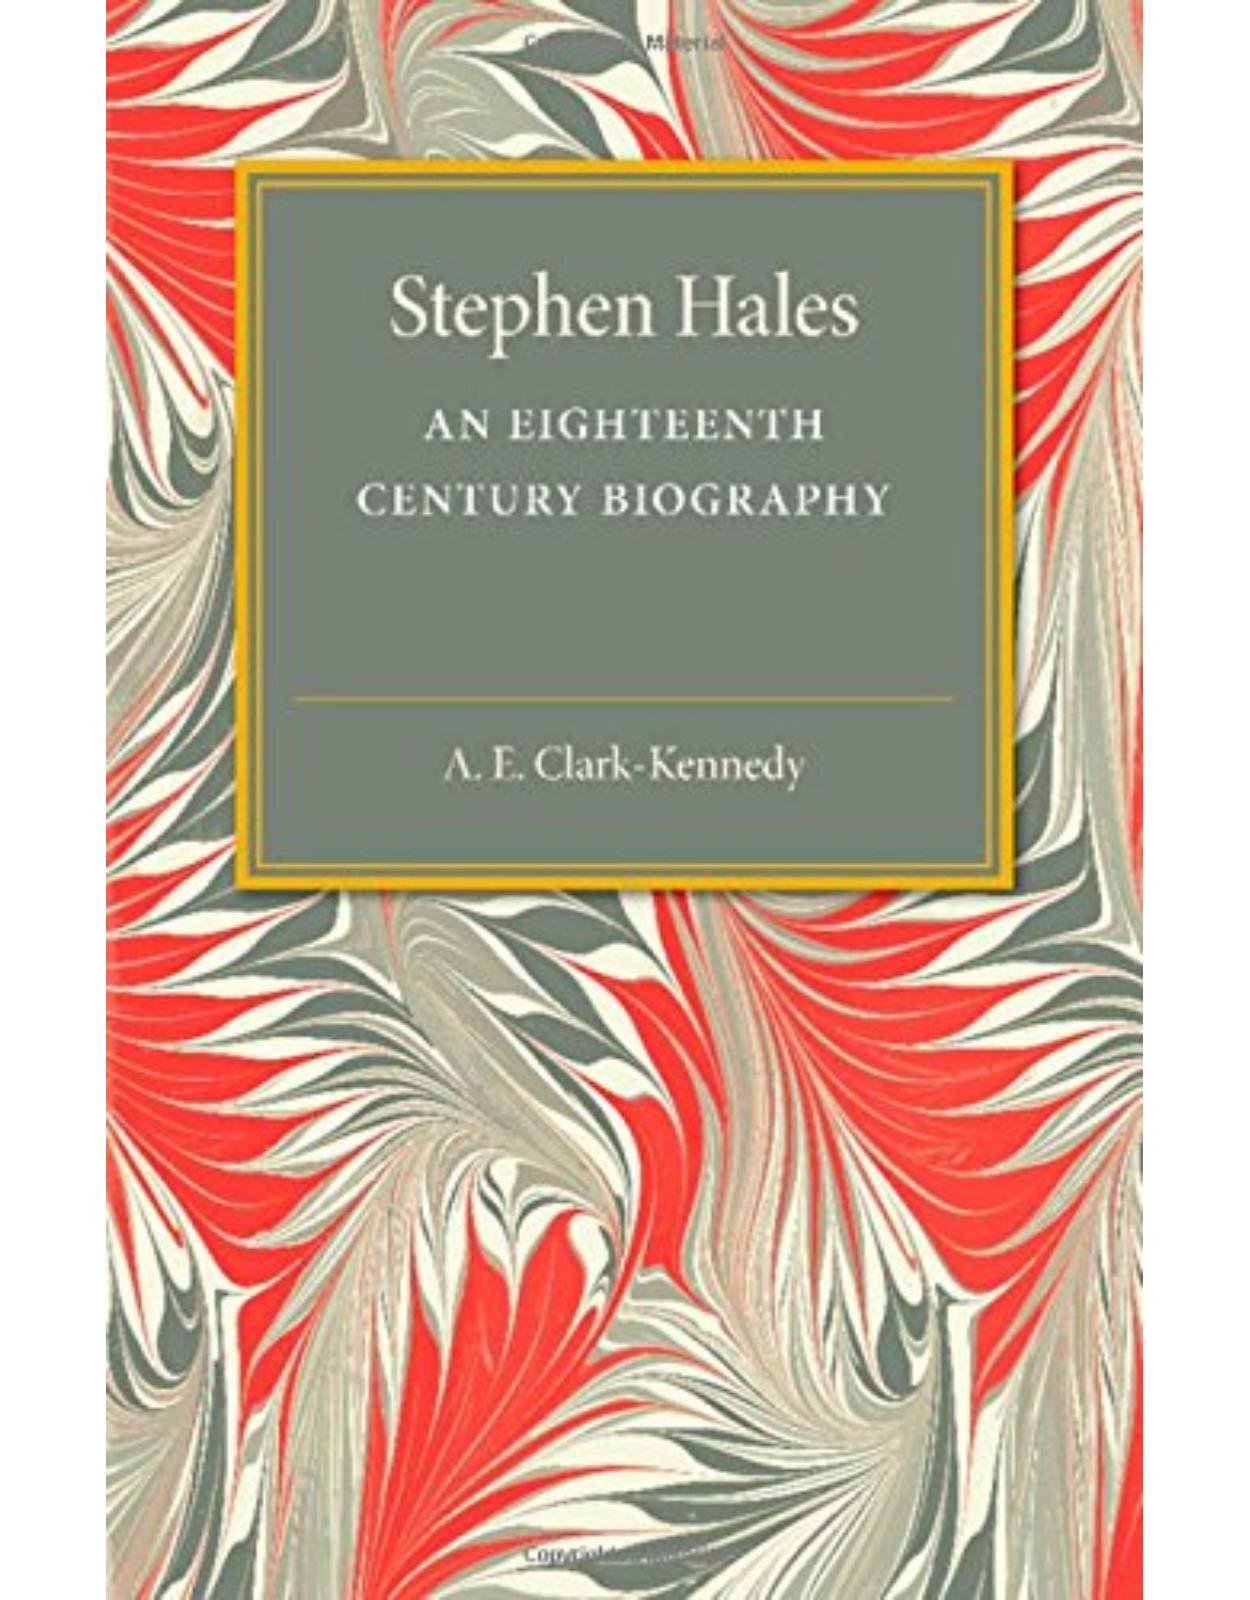 Stephen Hales: An Eighteenth Century Biography